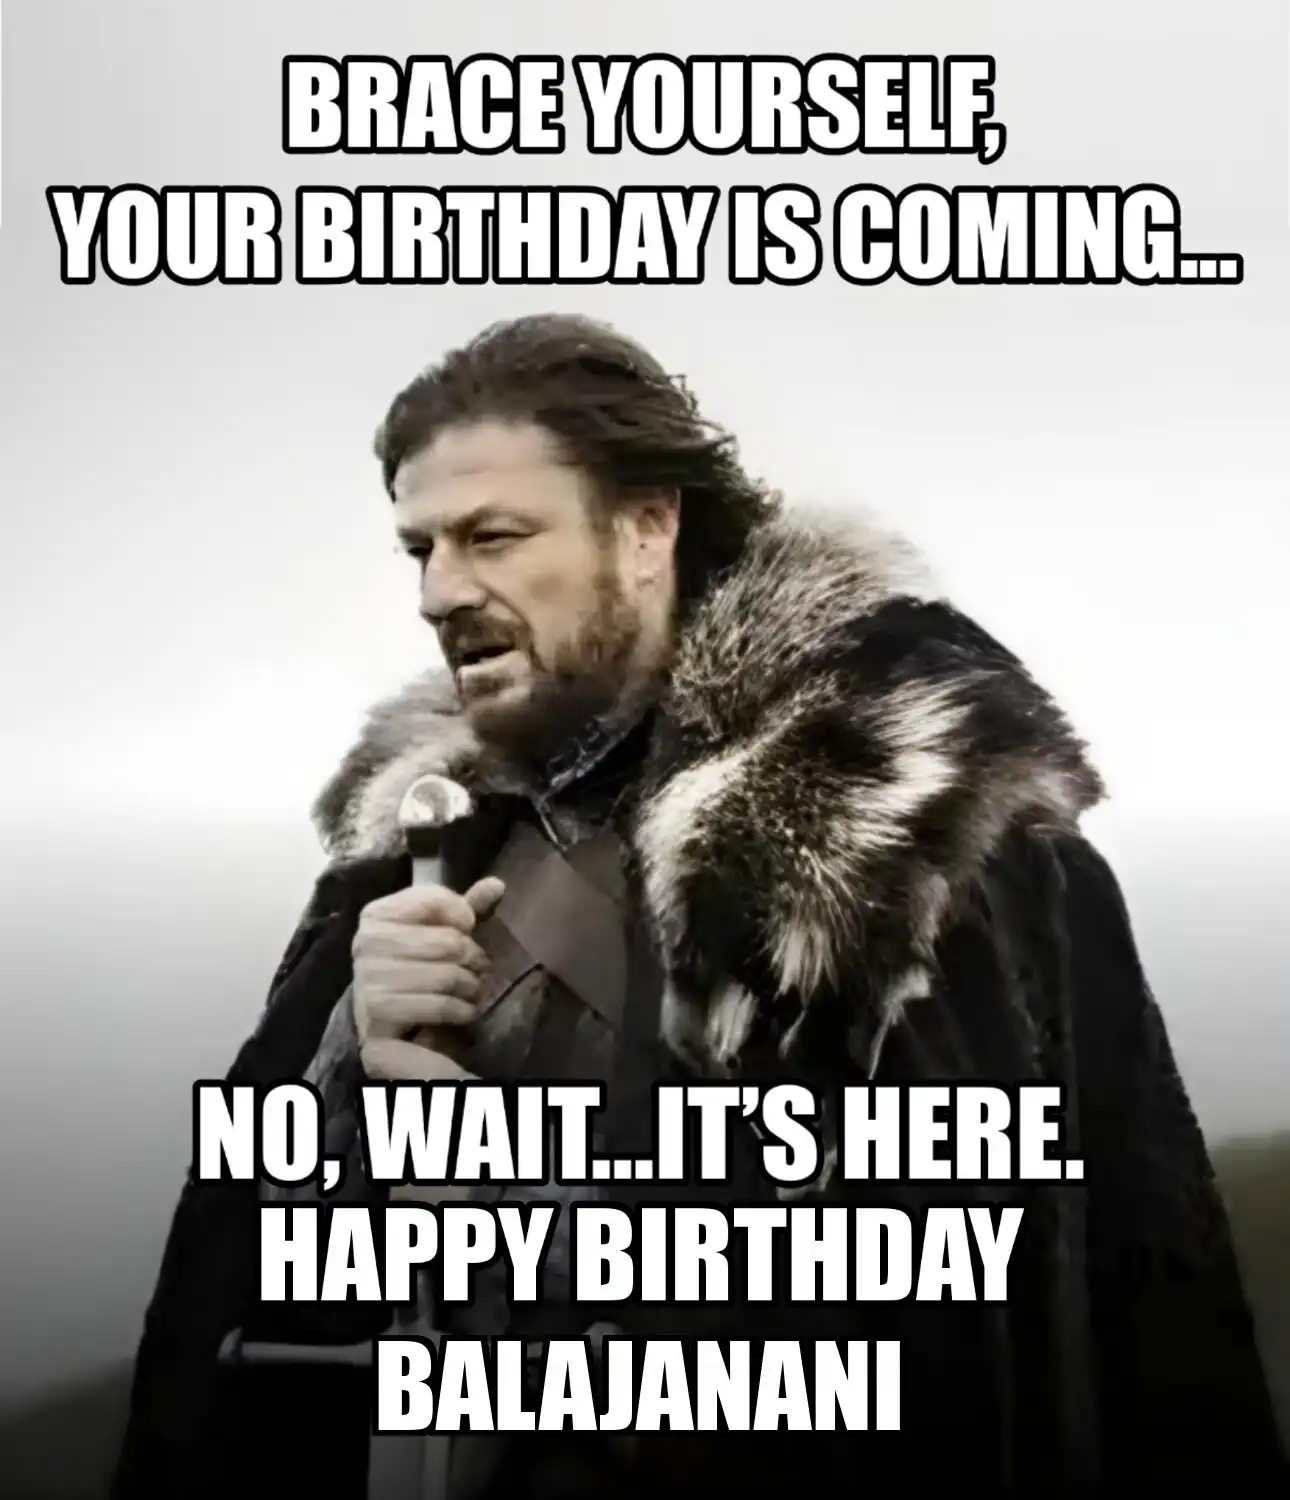 Happy Birthday Balajanani Brace Yourself Your Birthday Is Coming Meme